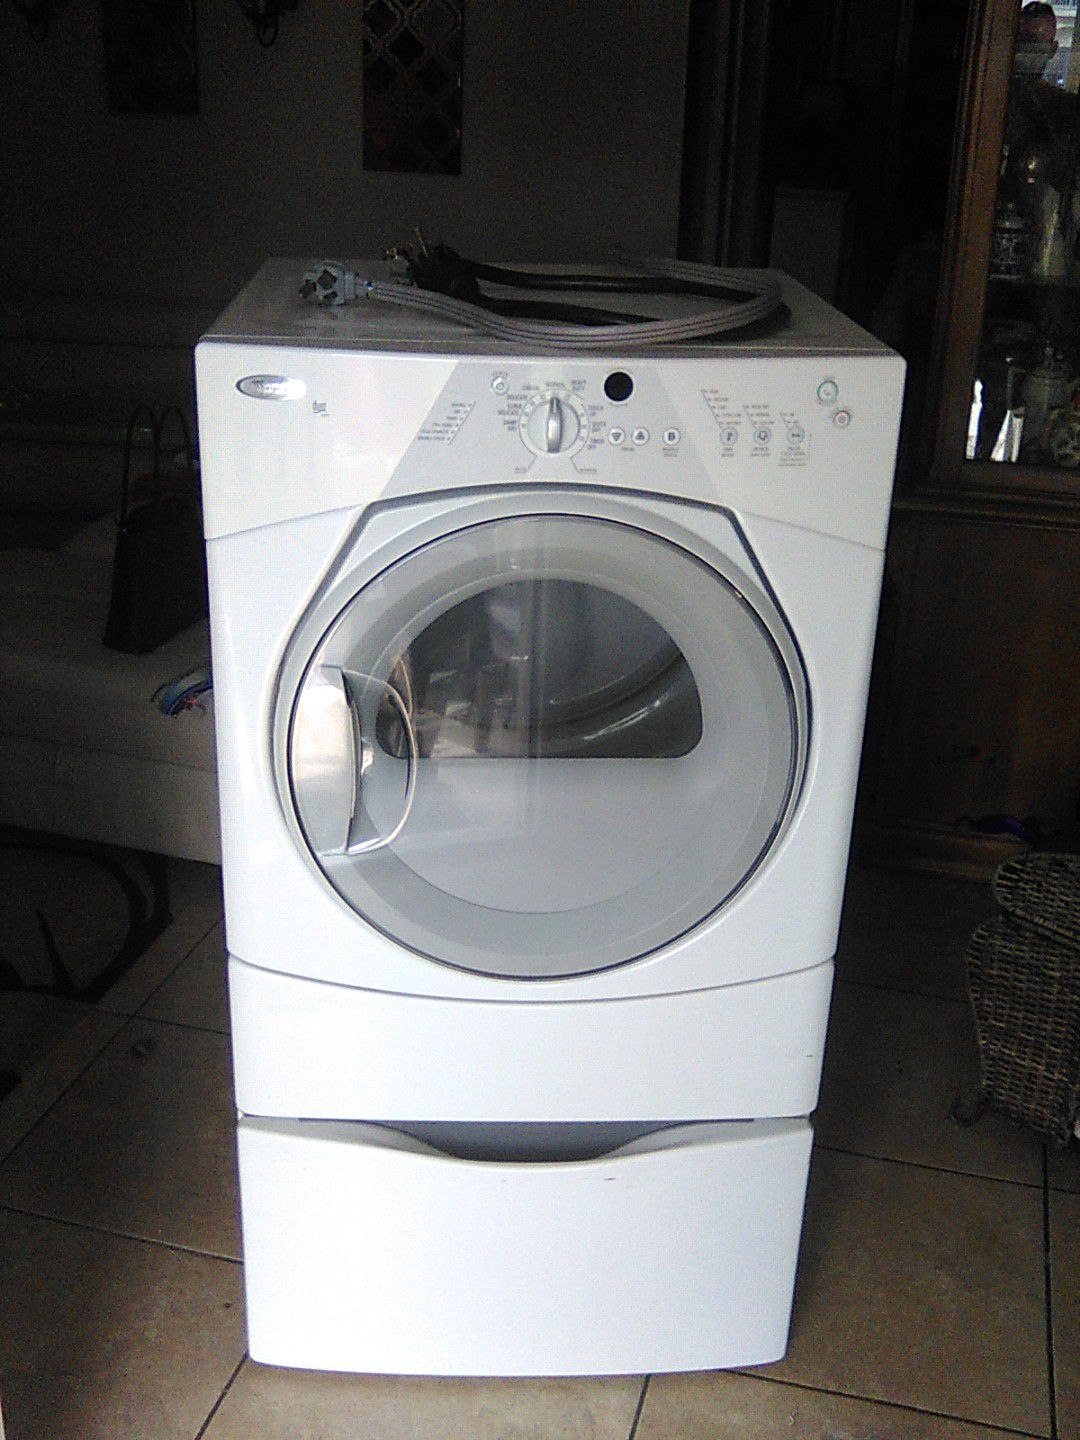 Whirlpool duet sport dryer (normal dry setting)